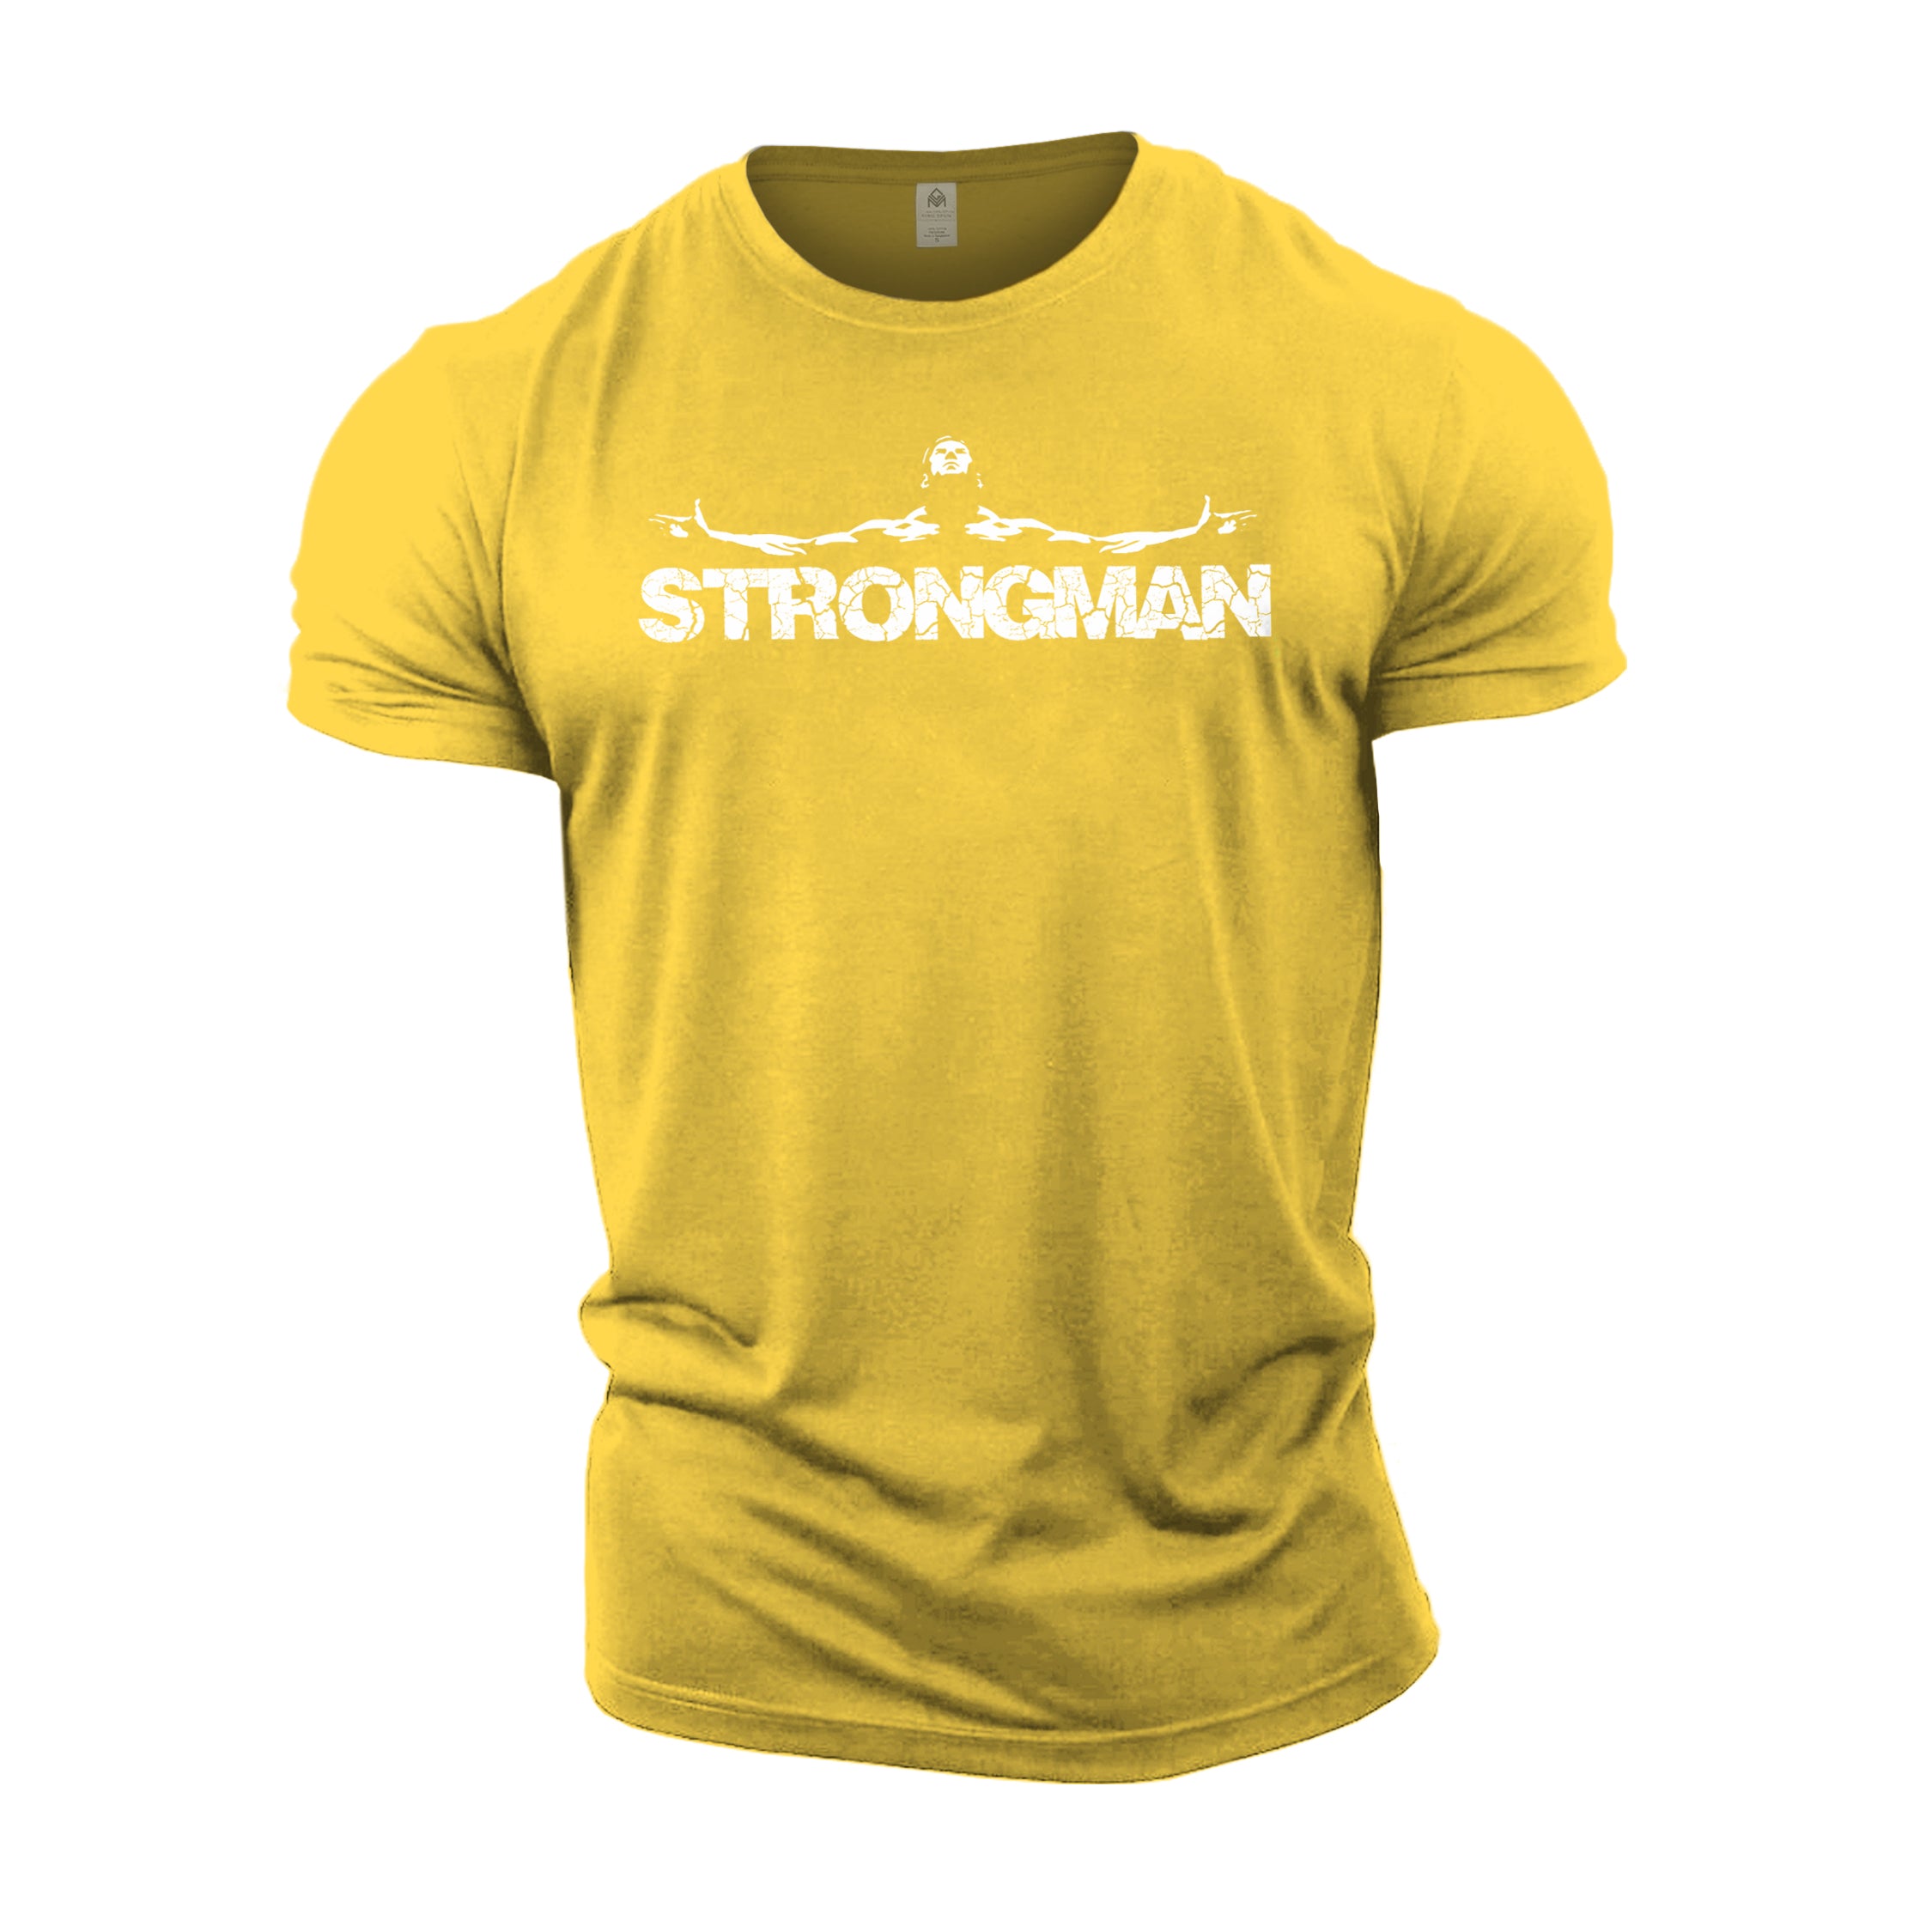 Strong Man - Gym T-Shirt